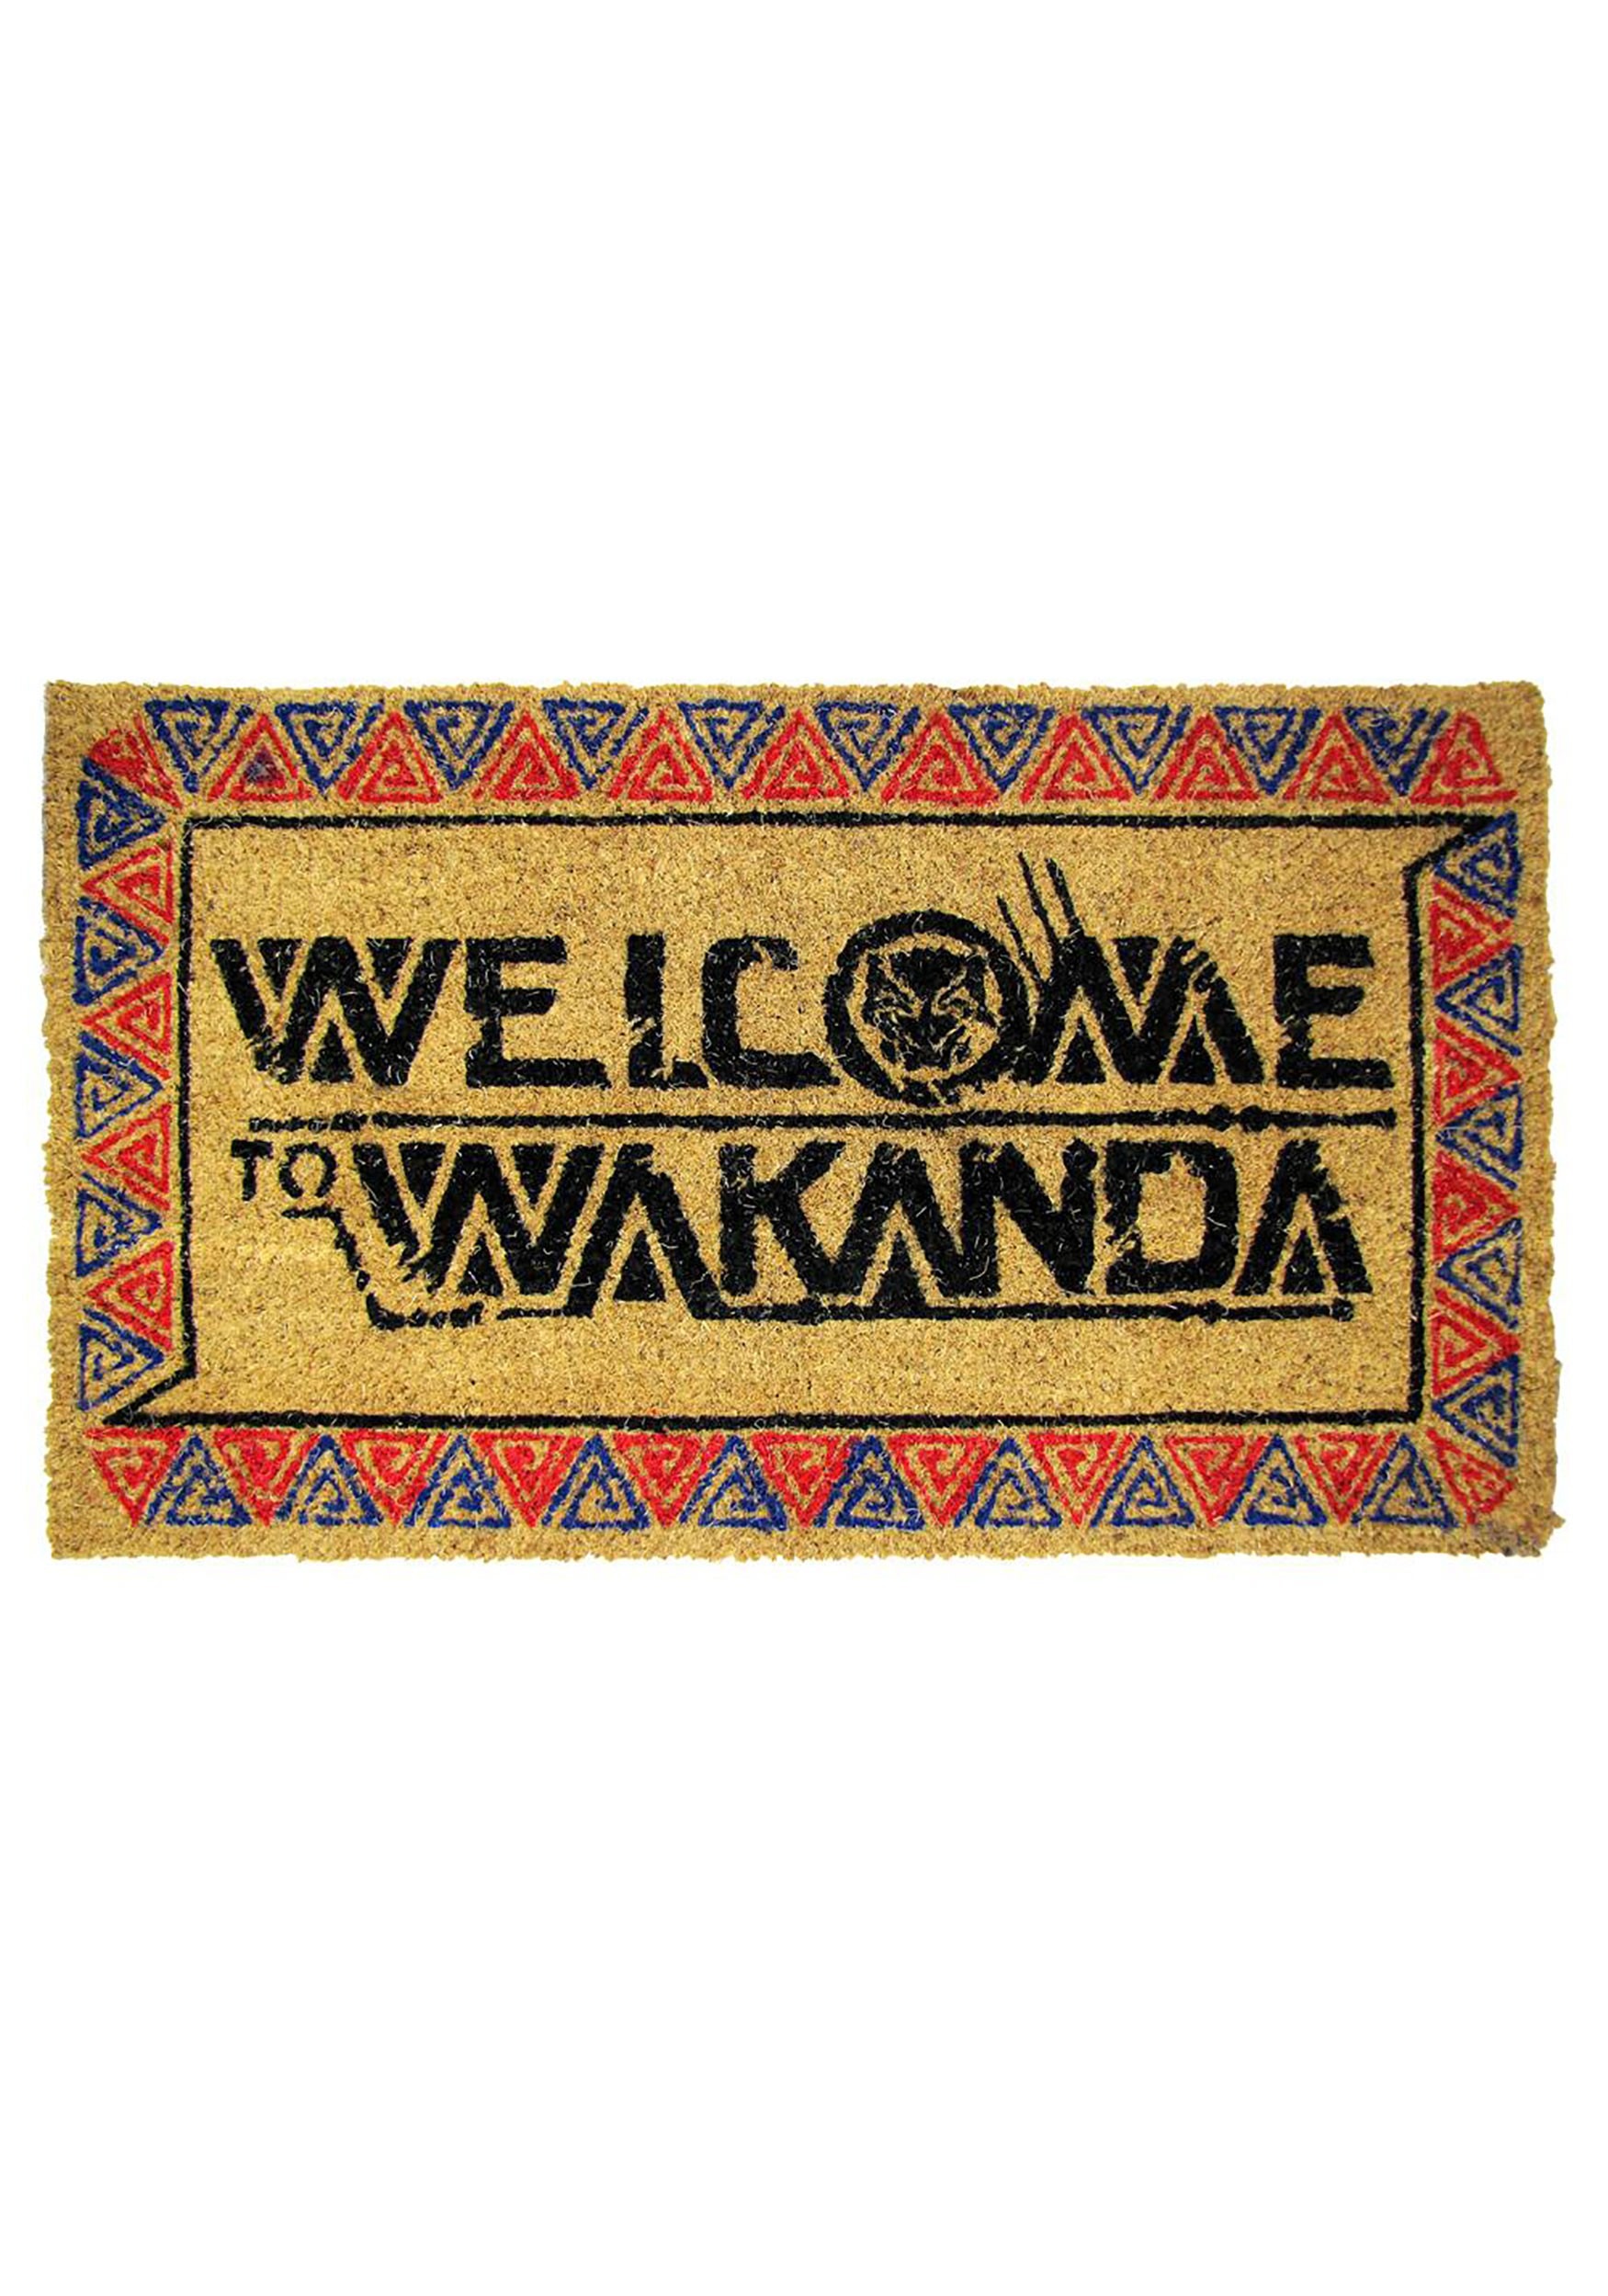 Welcome to Wakanda Black Panther Doormat